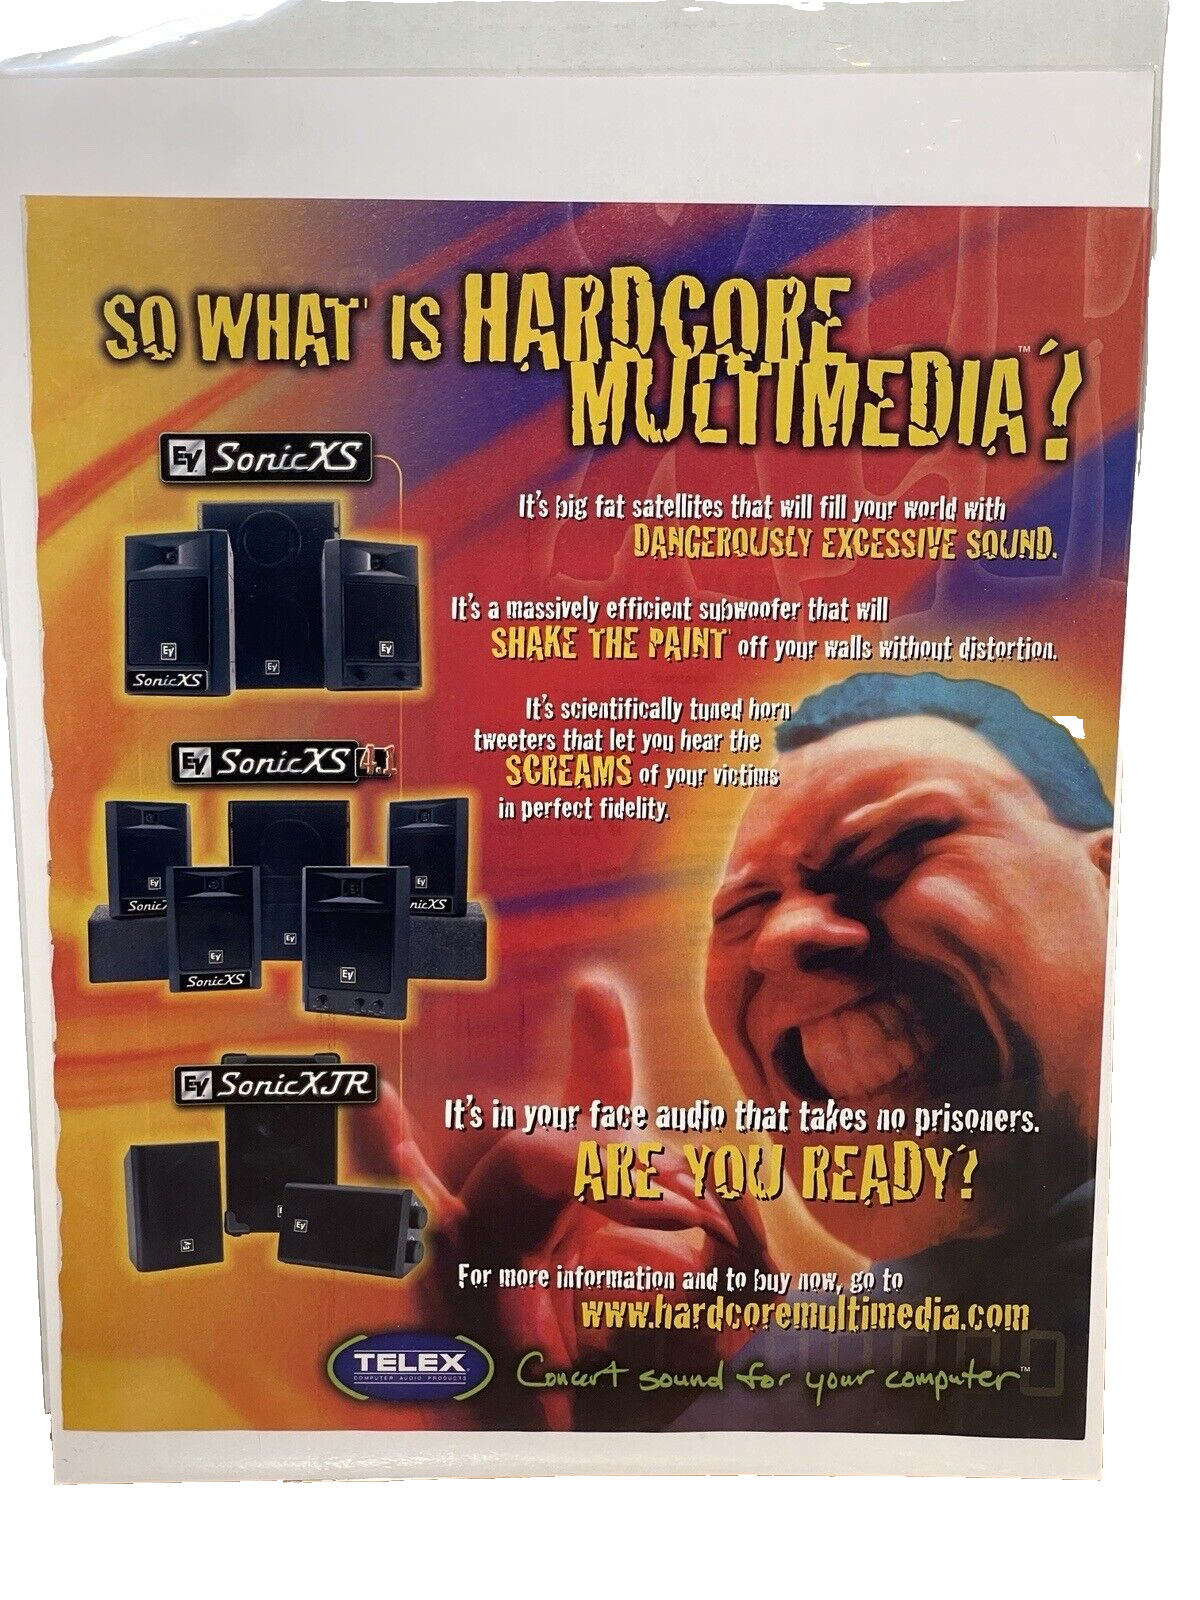 Sonic XS 4.1 XJR Magazine Print Ad TELEX Computer Audio Products Concert Sound